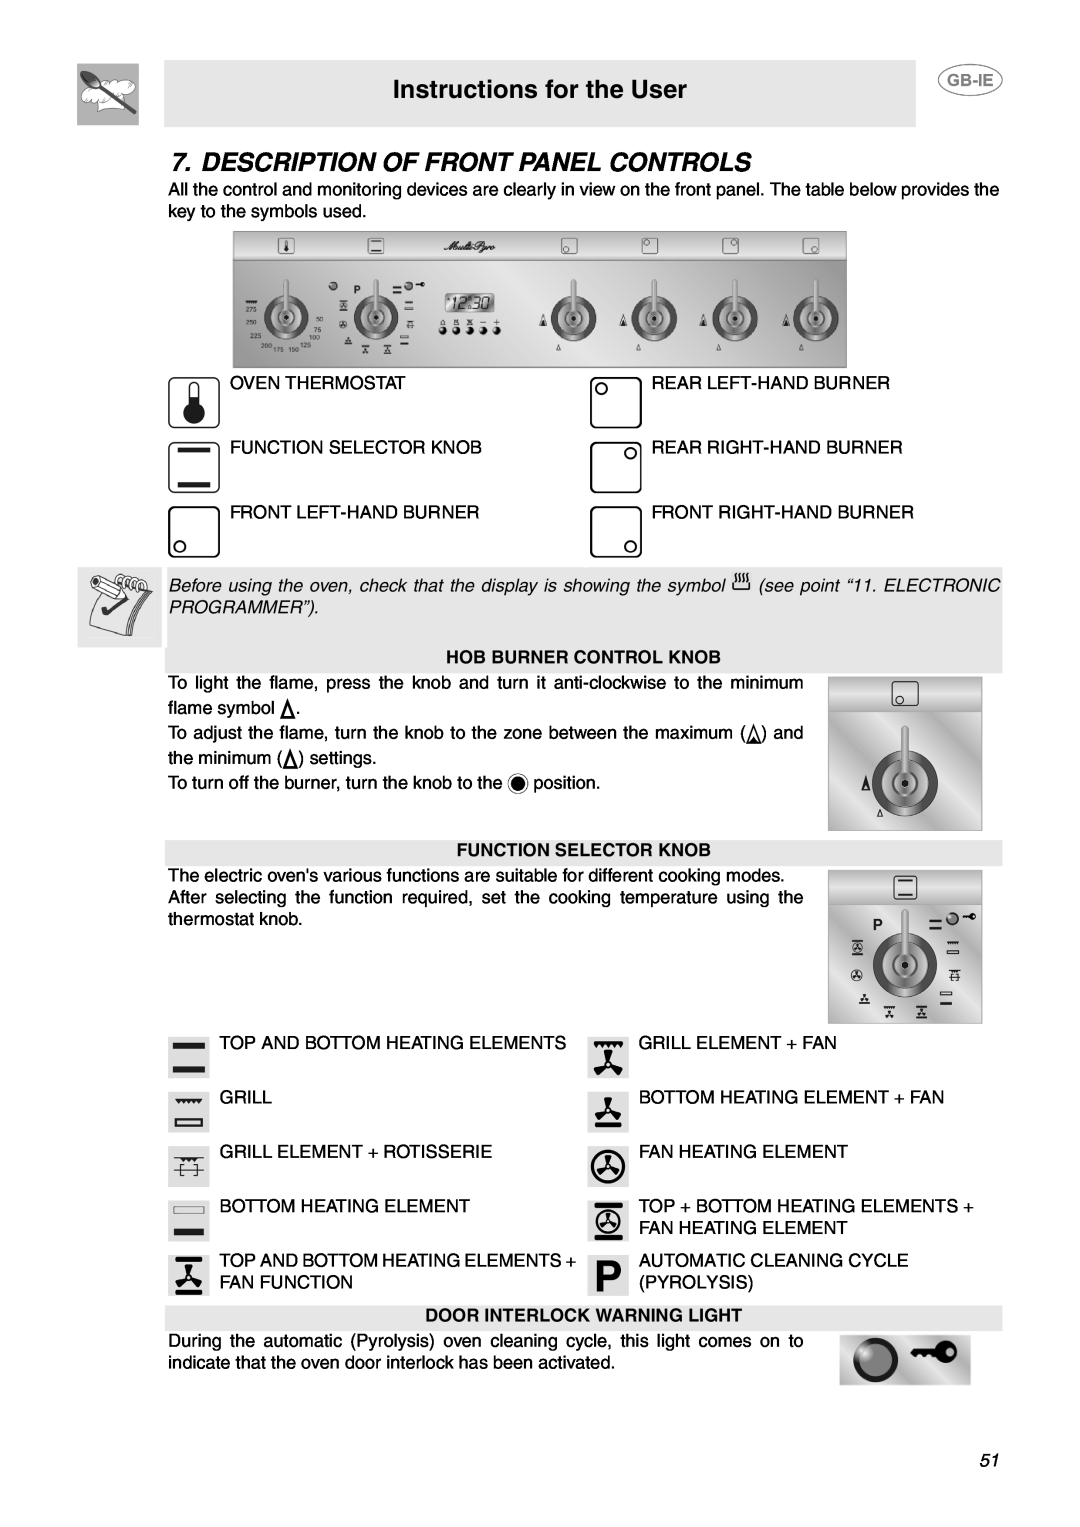 Smeg CP60X6 manual Description Of Front Panel Controls, Instructions for the User, Hob Burner Control Knob 